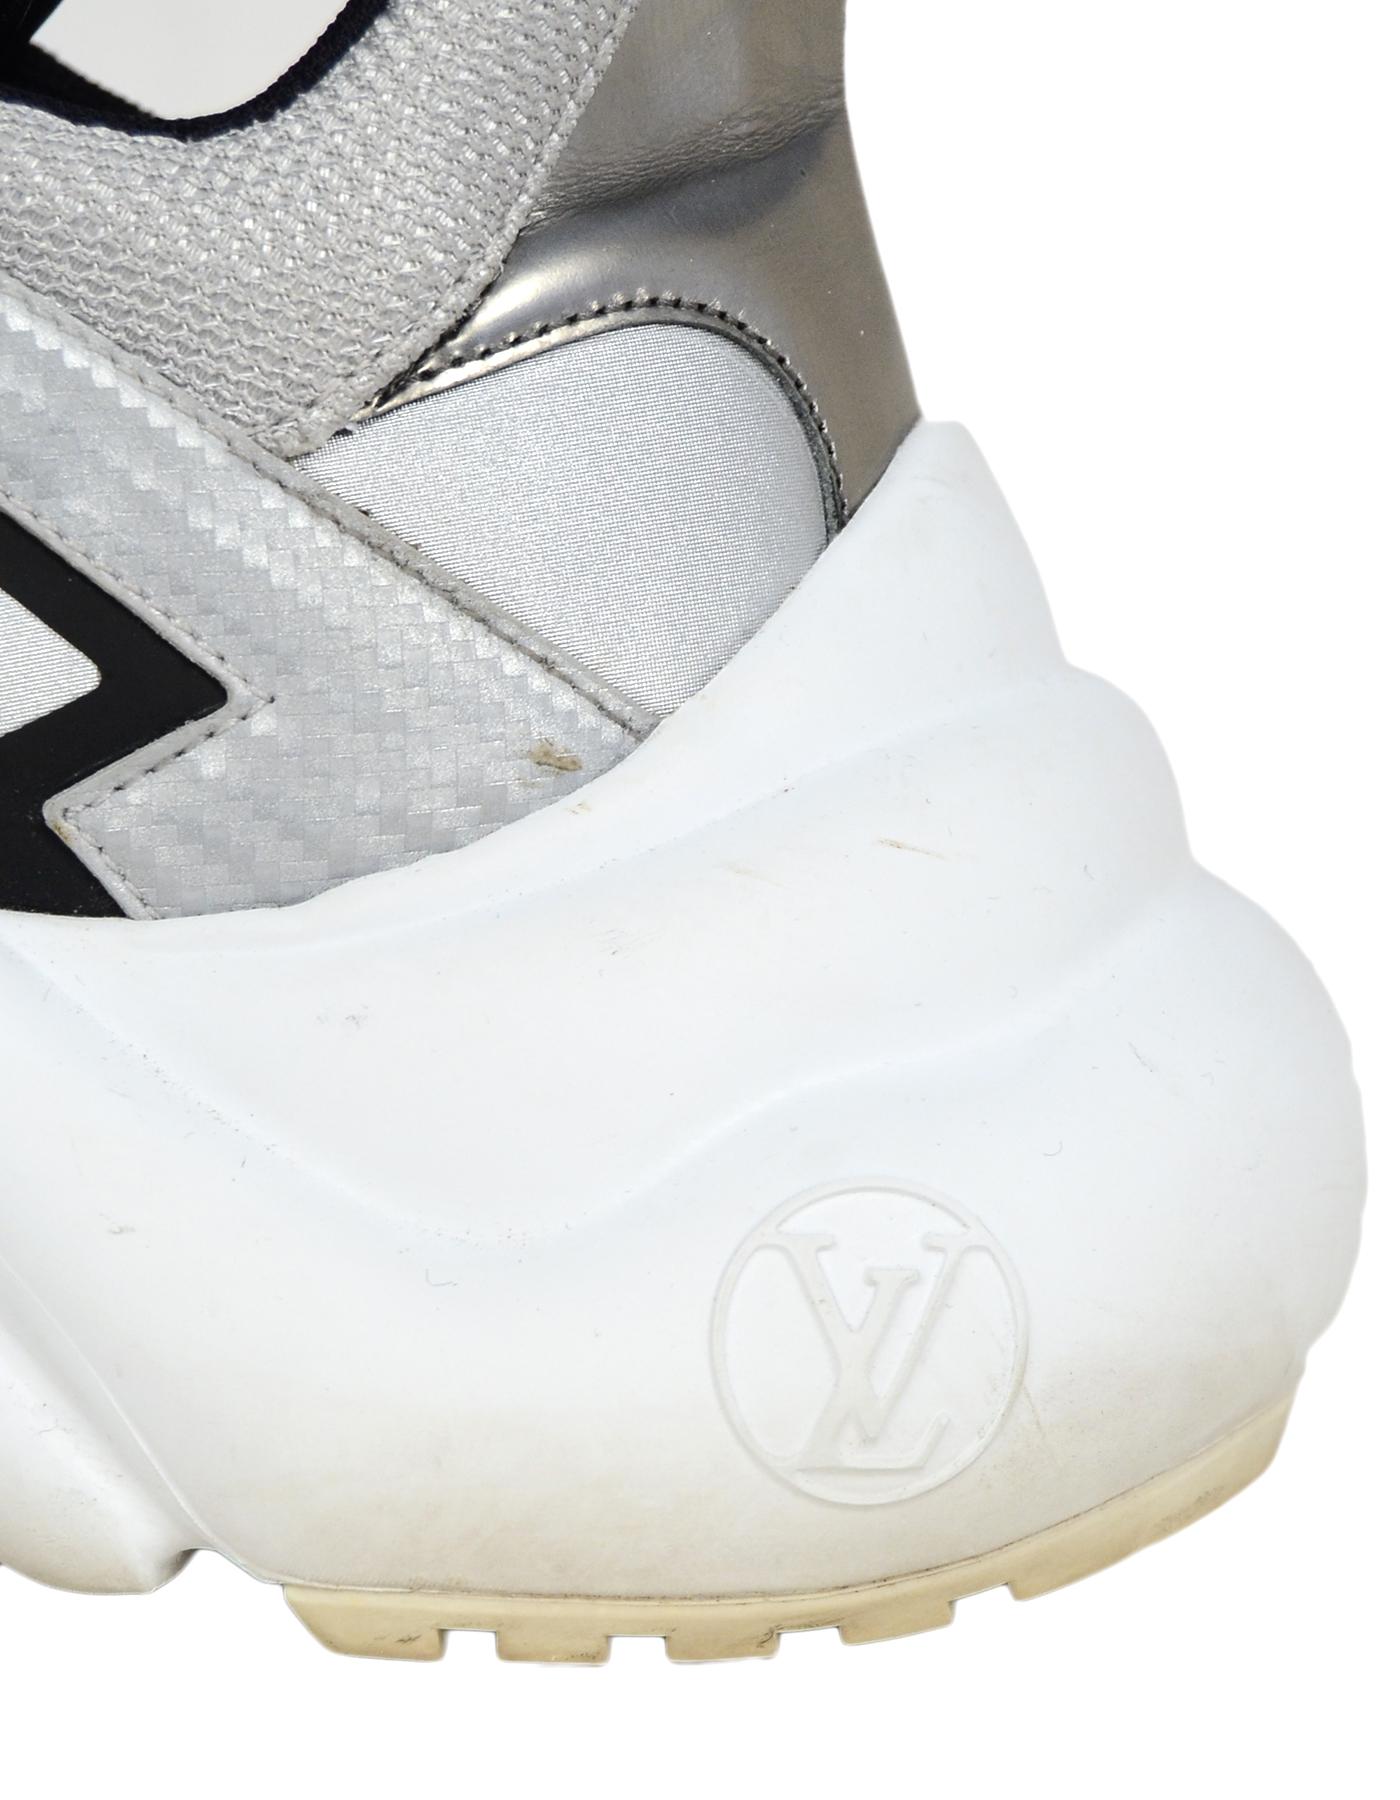 Louis Vuitton 2018 Silver/Black Archlight Reflective Sneakers sz 39 rt $1, 500 4